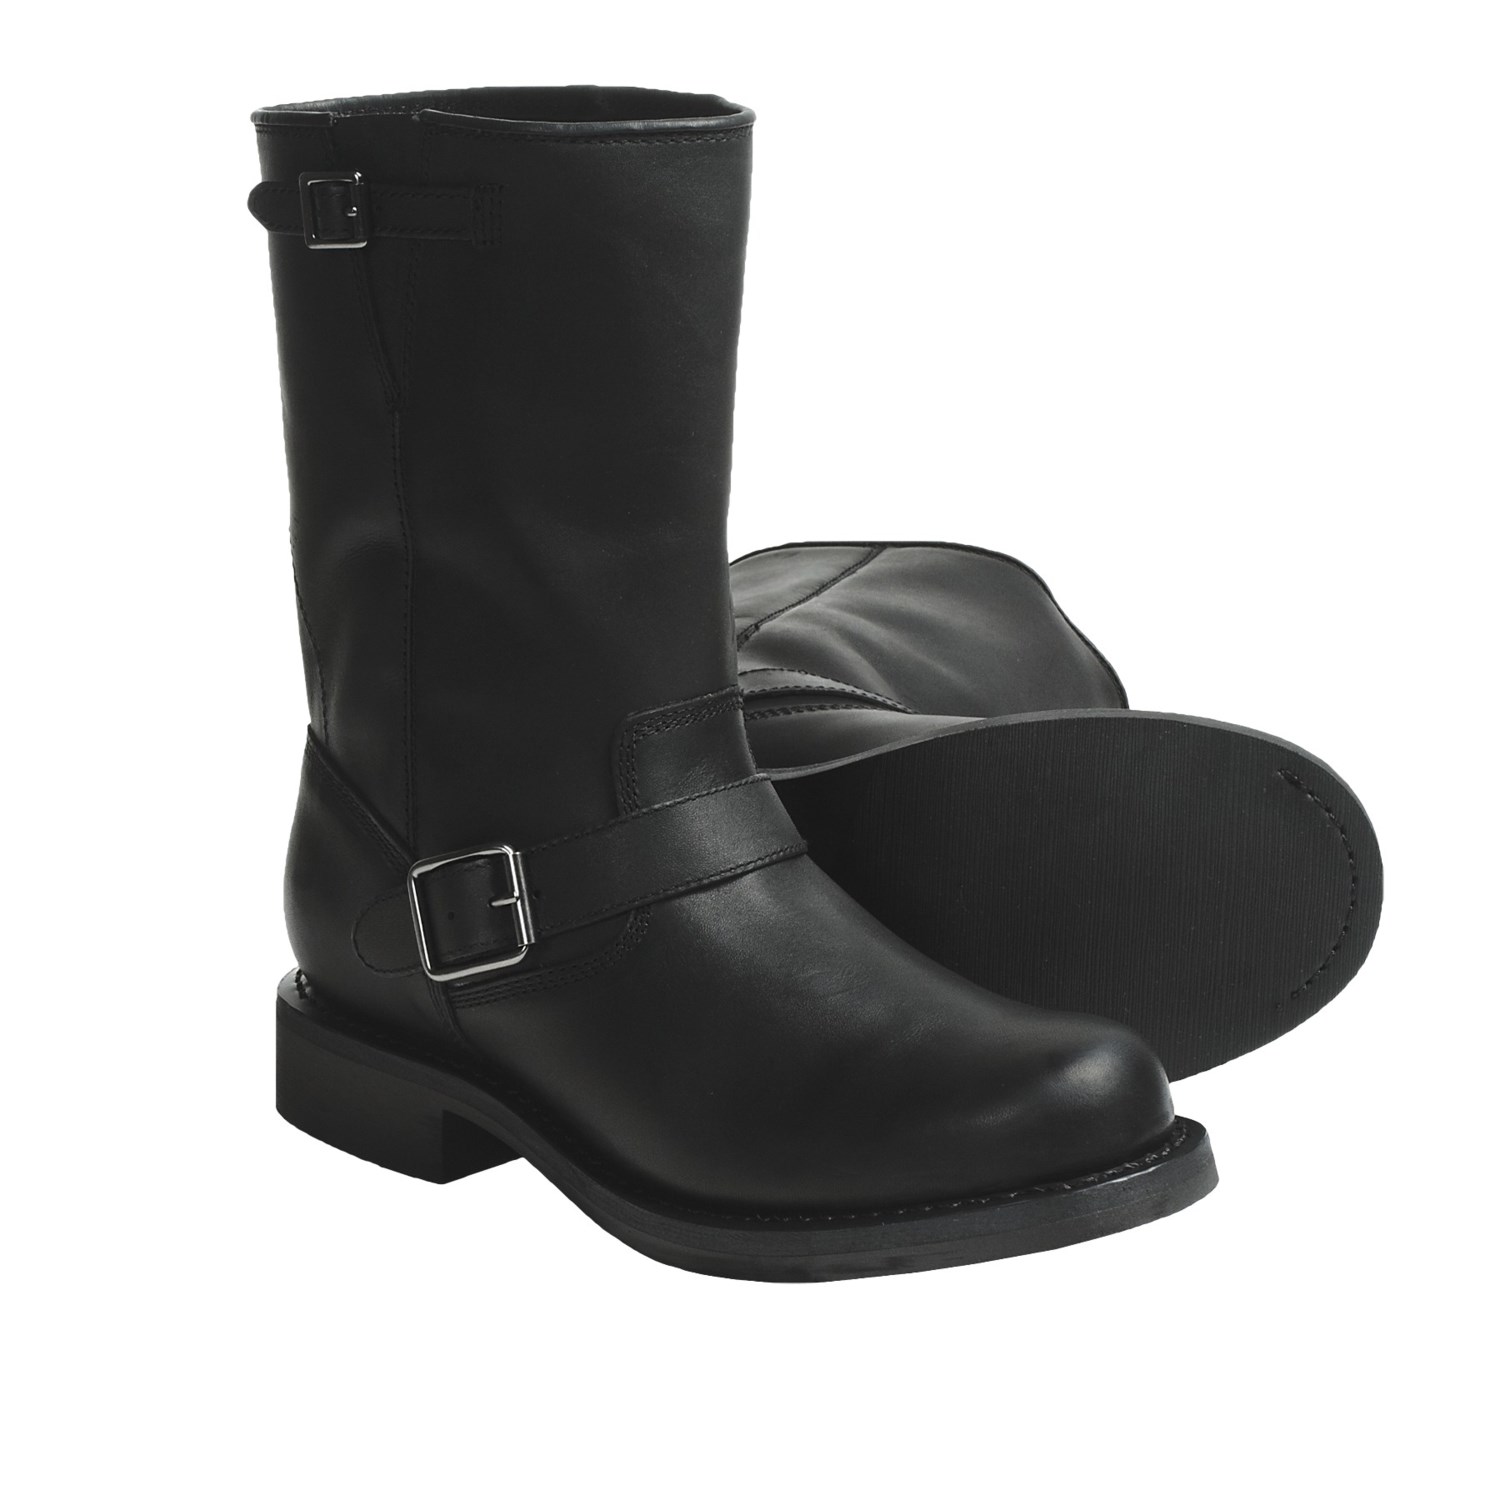 Durango Engineer Boots (For Men) 4614C - Save 35%